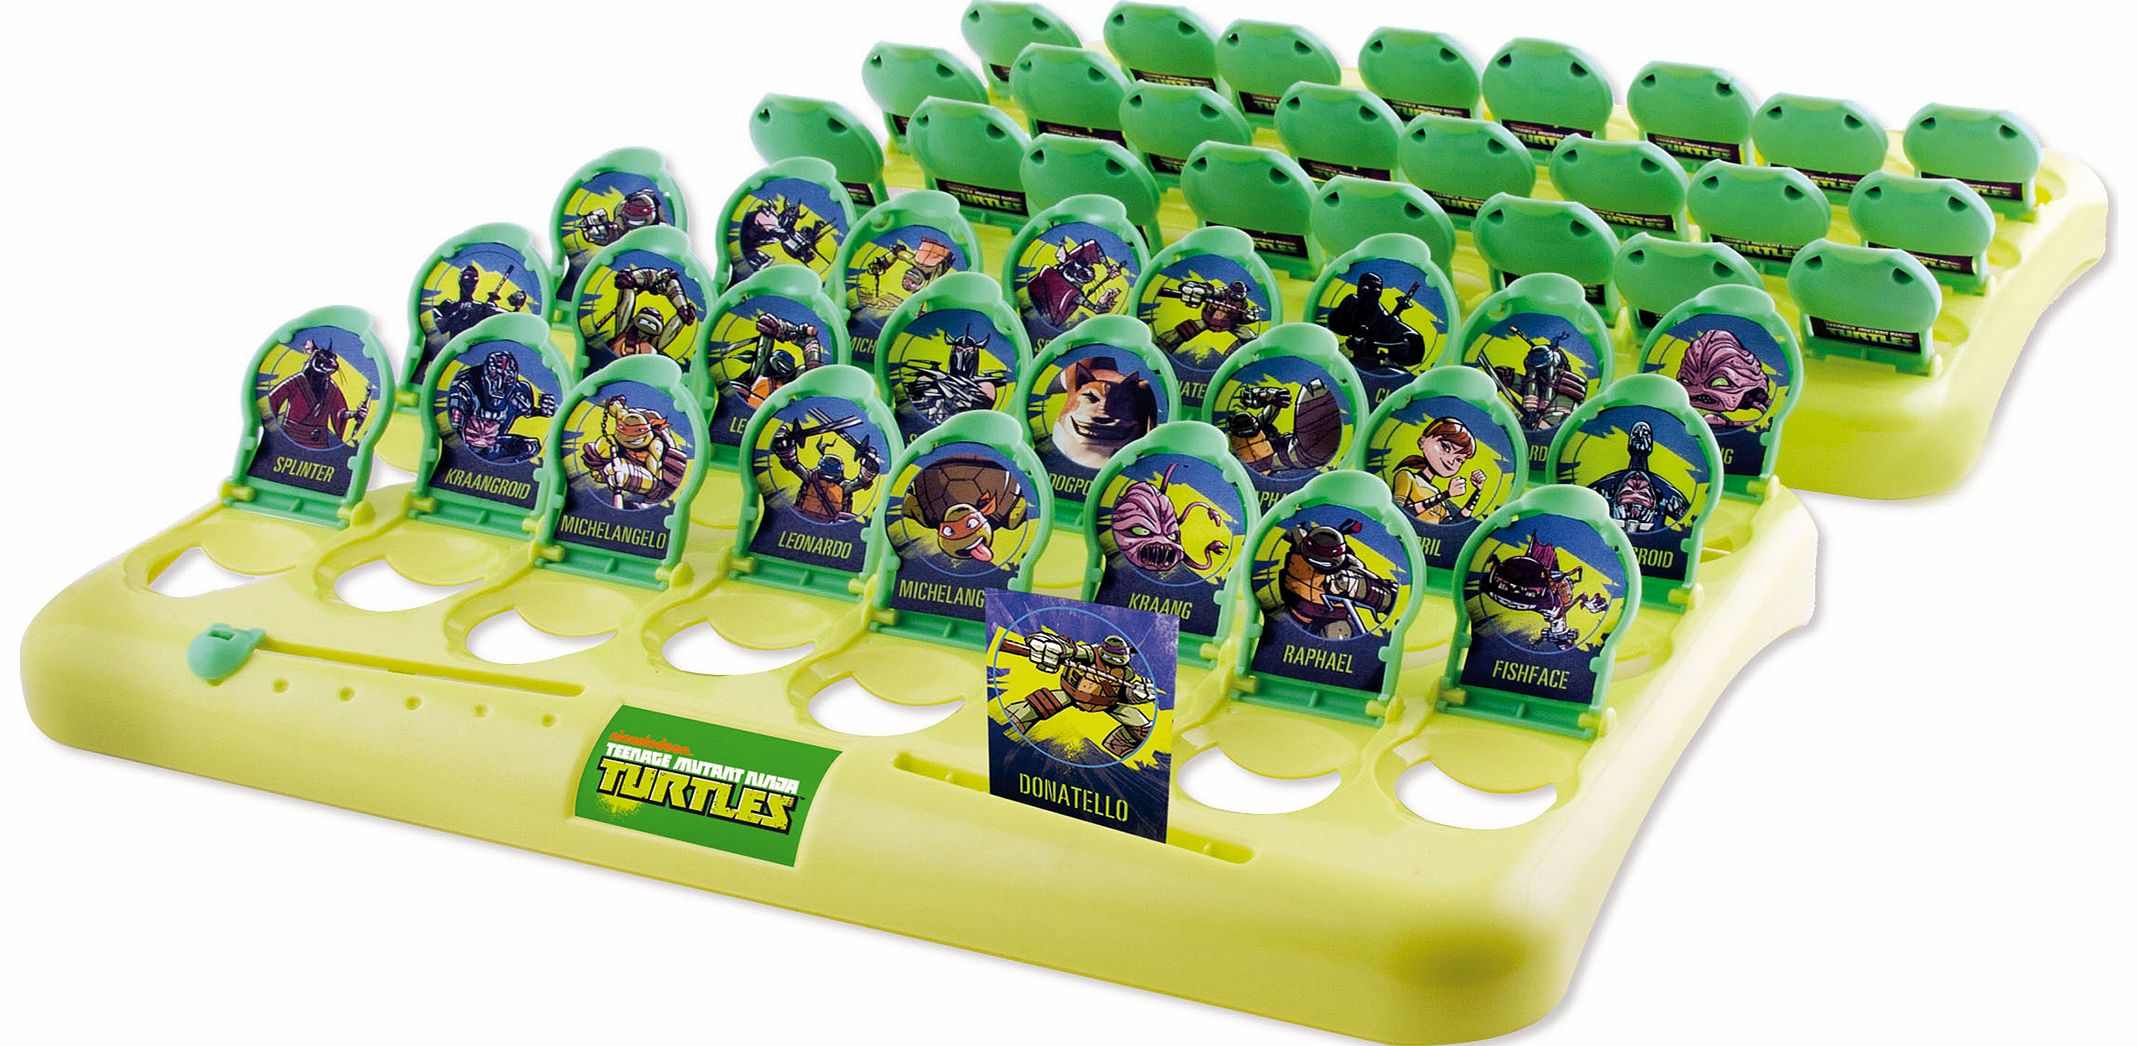 IMC Toys Teenage Mutant Ninja Turtles Guessing Game